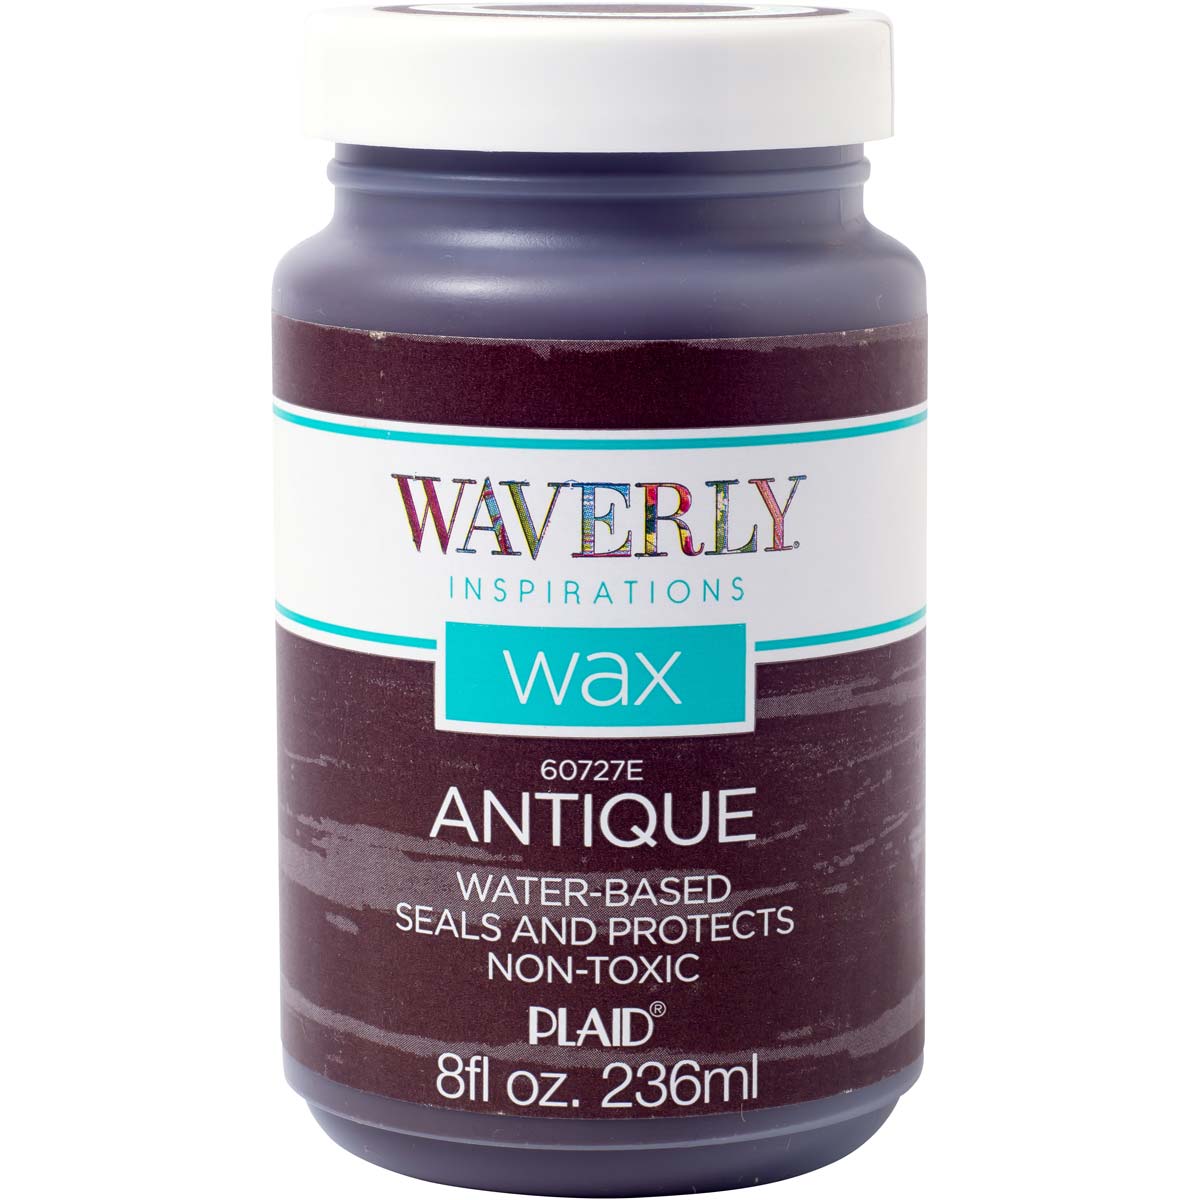 Waverly ® Inspirations Wax - Antique, 8 oz. - 60727E